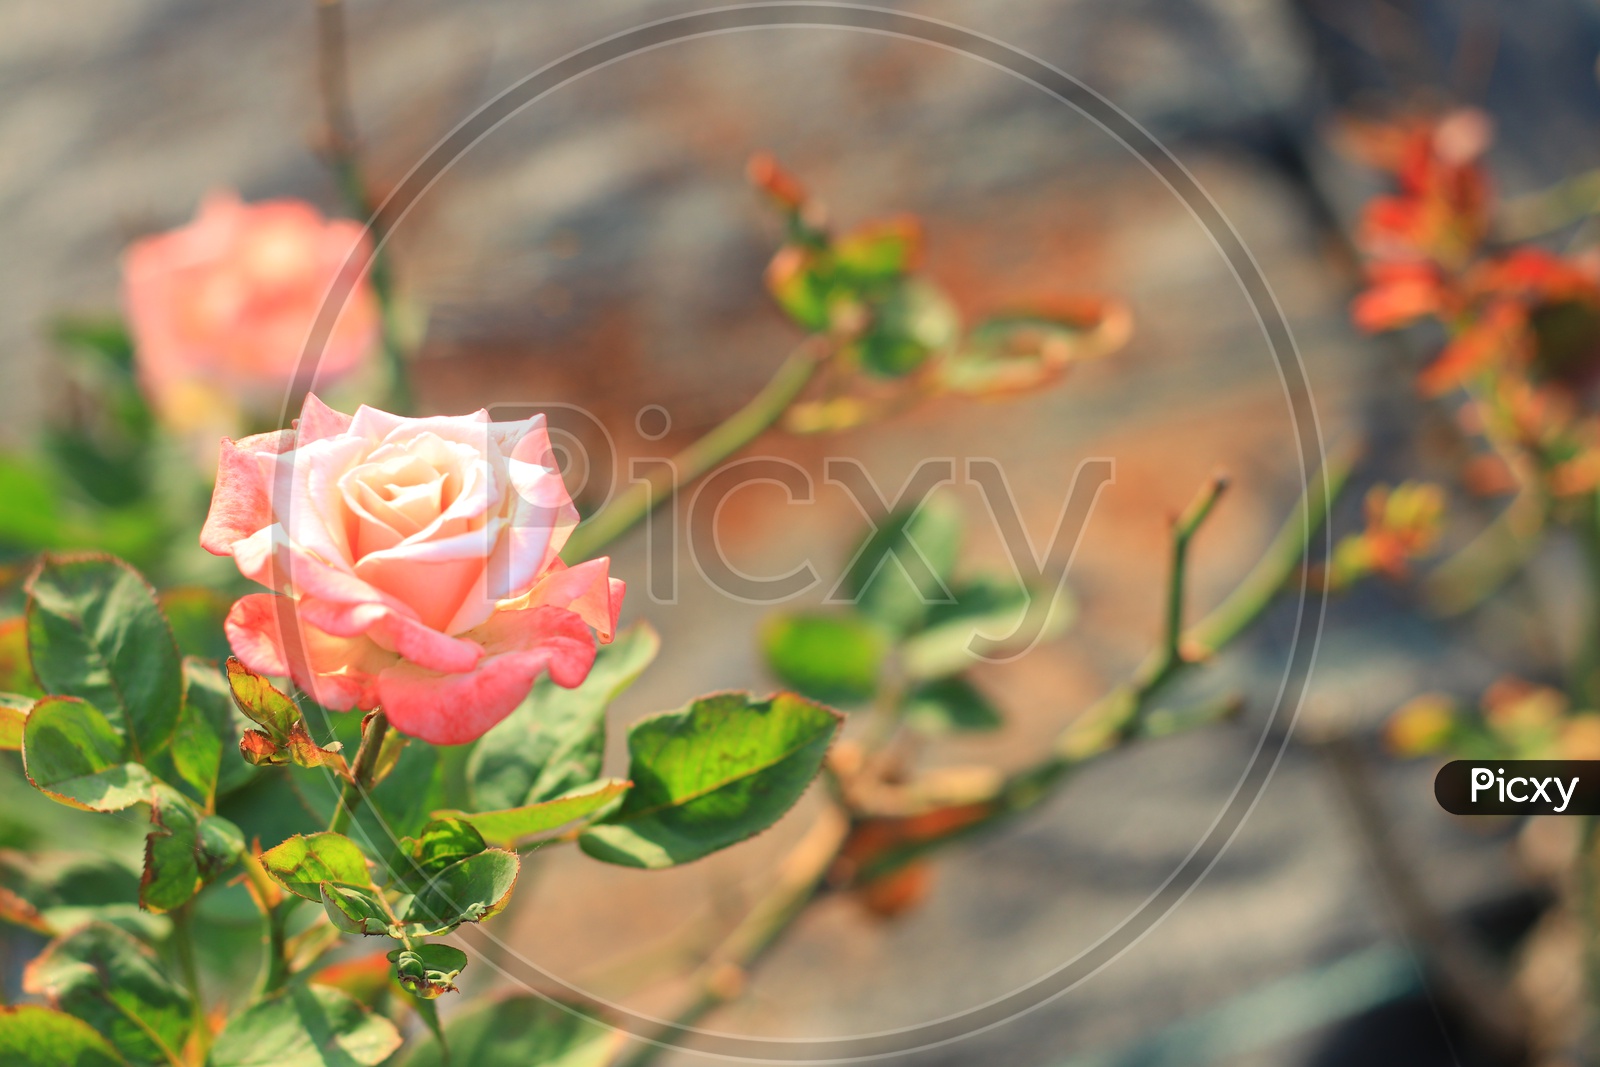 A rose flower